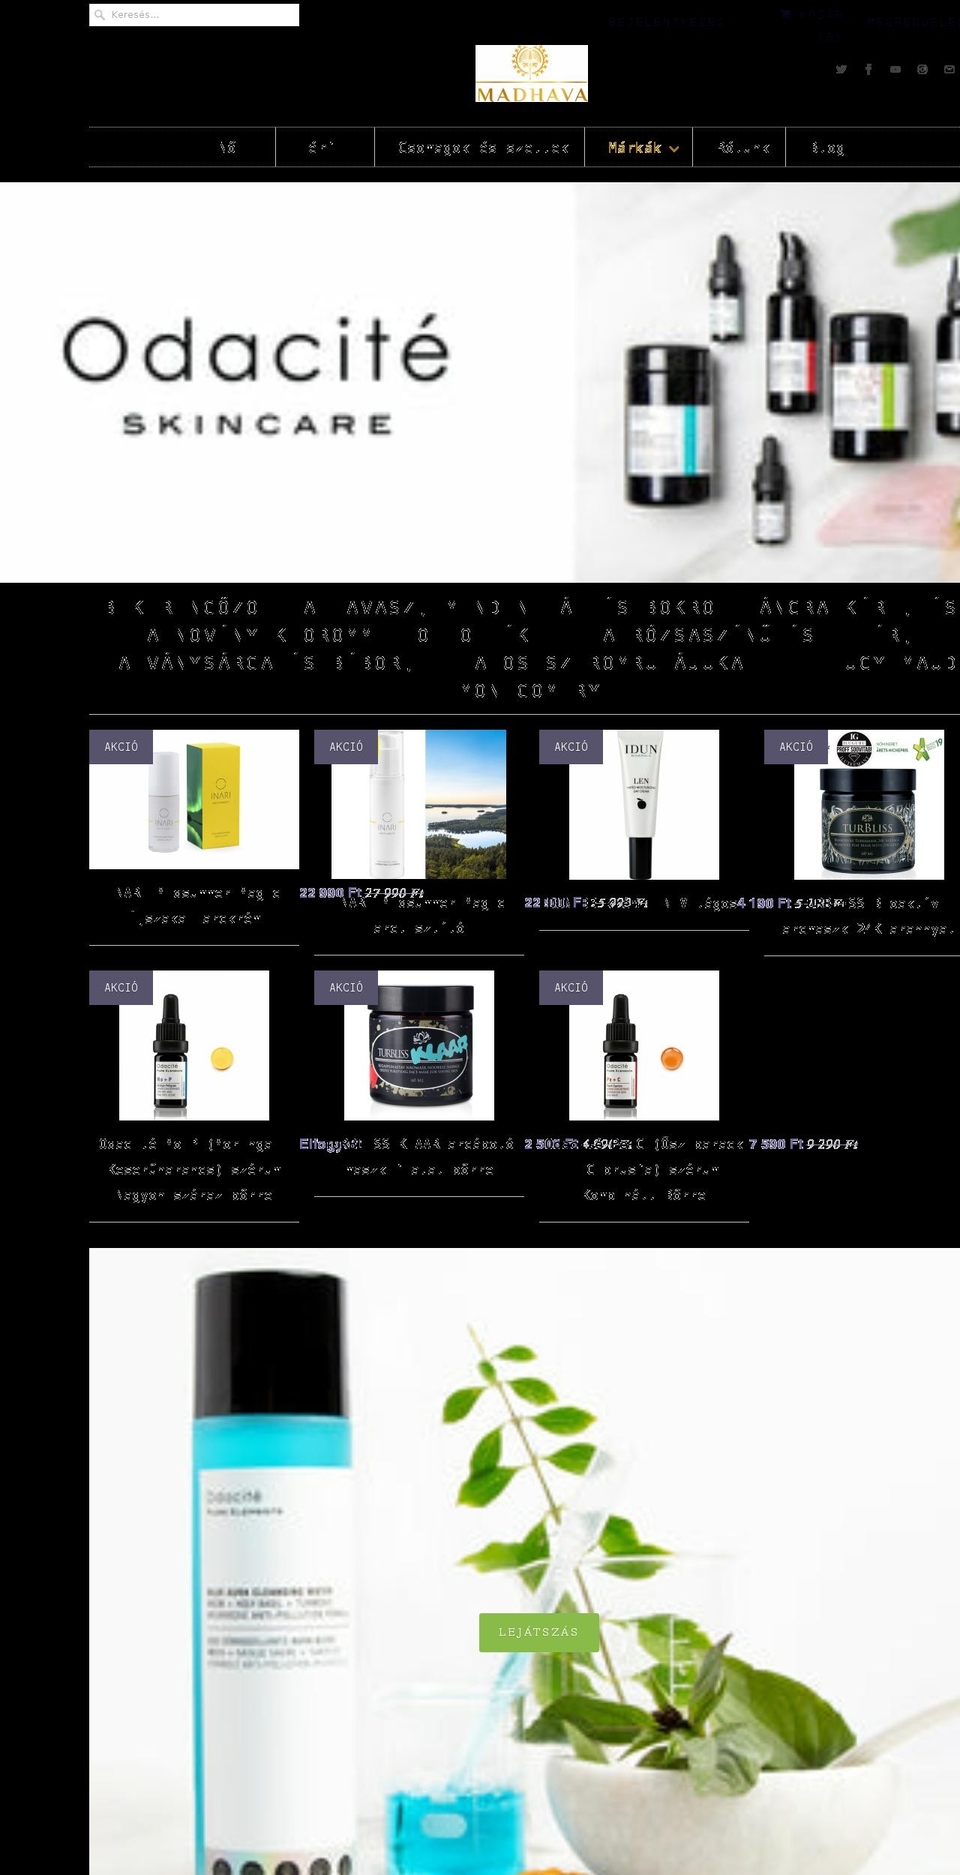 madhava.hu shopify website screenshot